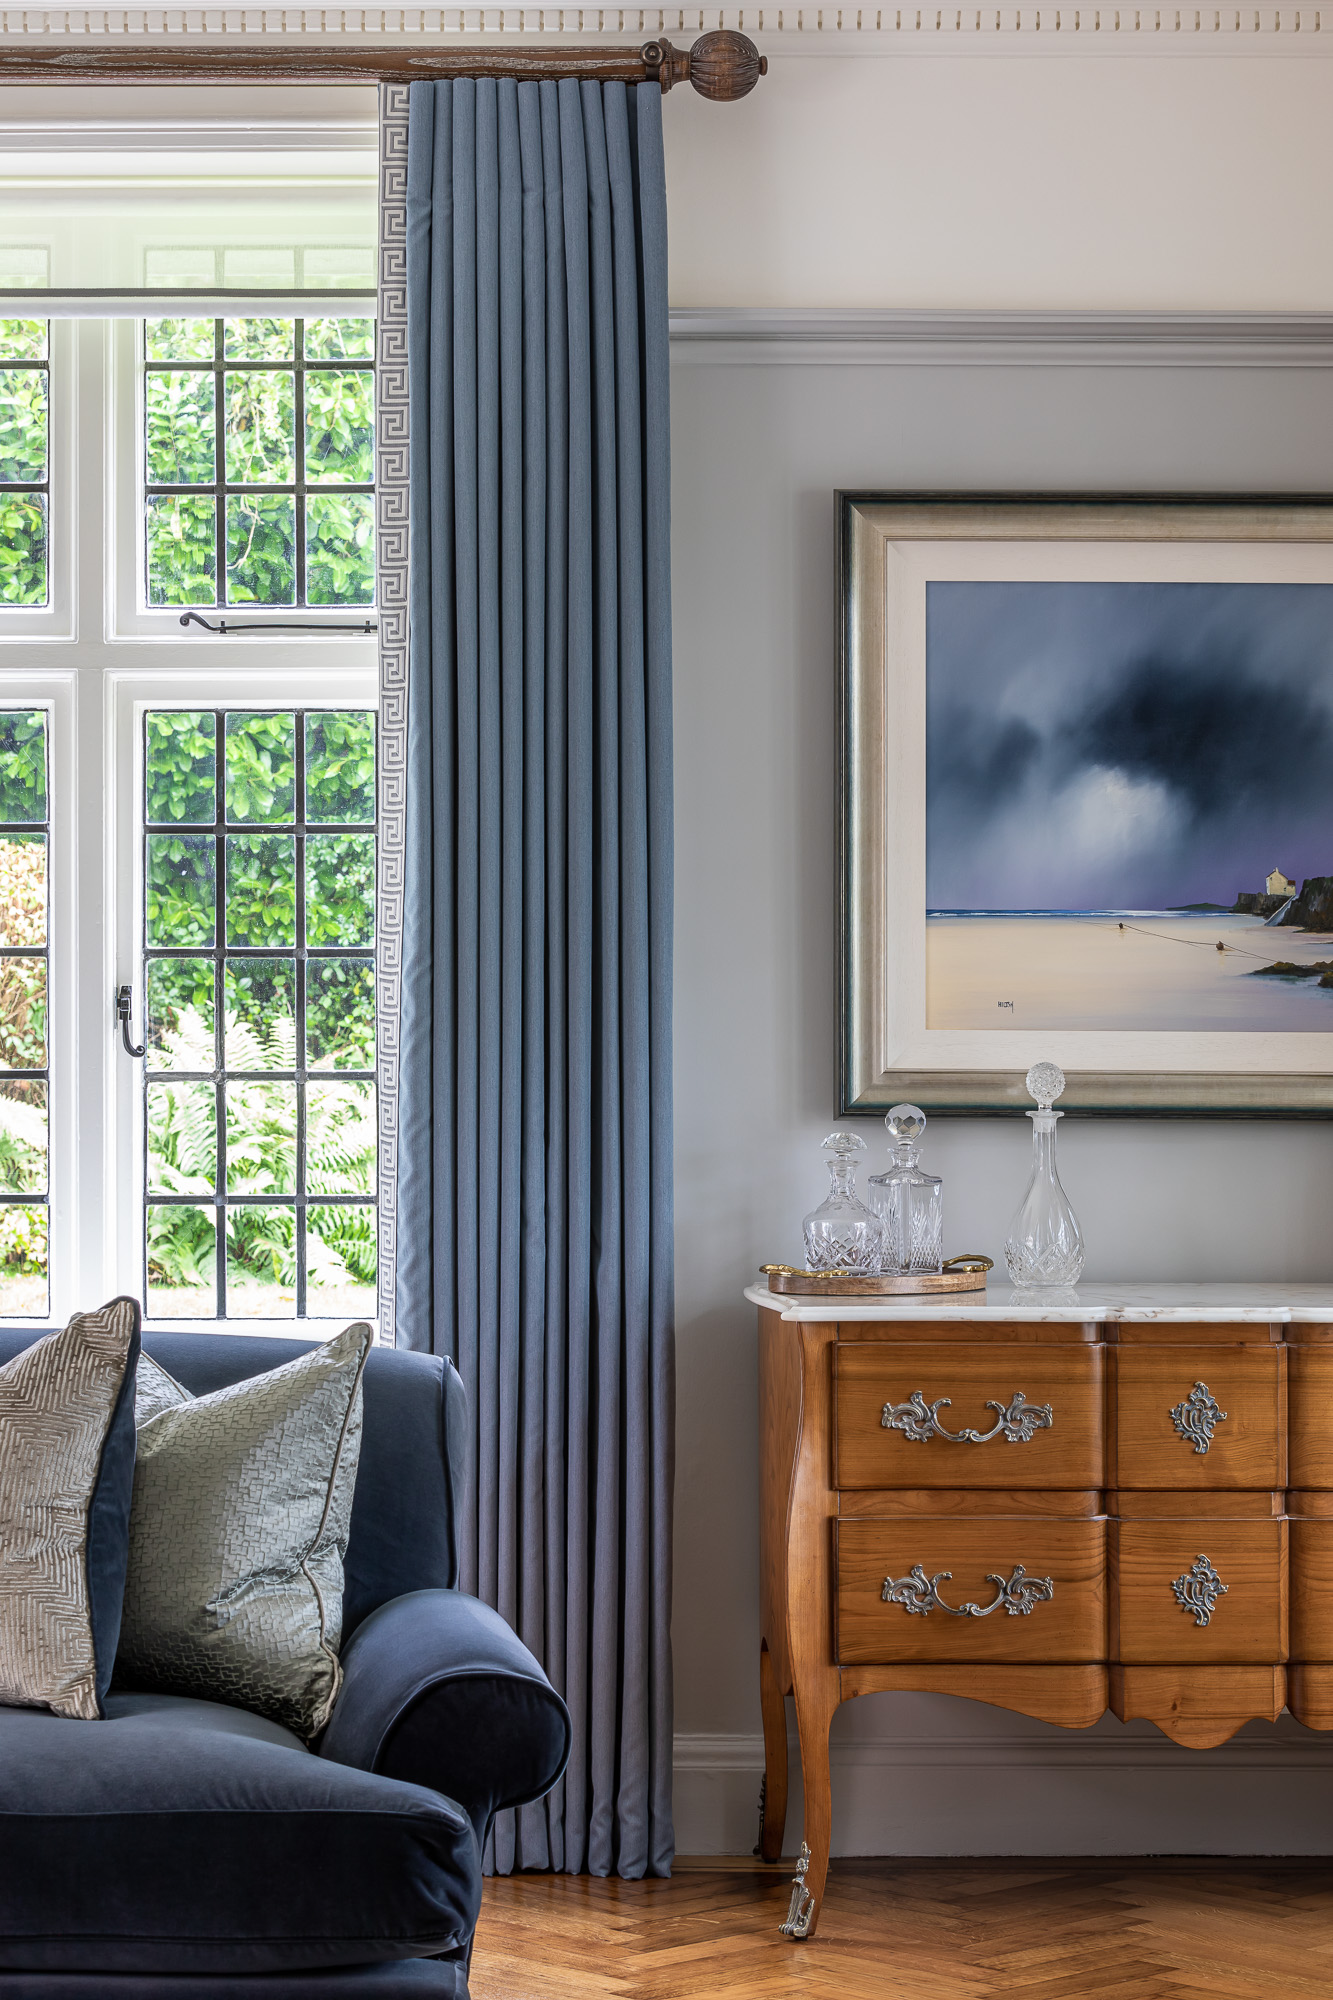 jonathan bond, interior photographer, living room view of blue curtains, great missenden, buckinghamshire